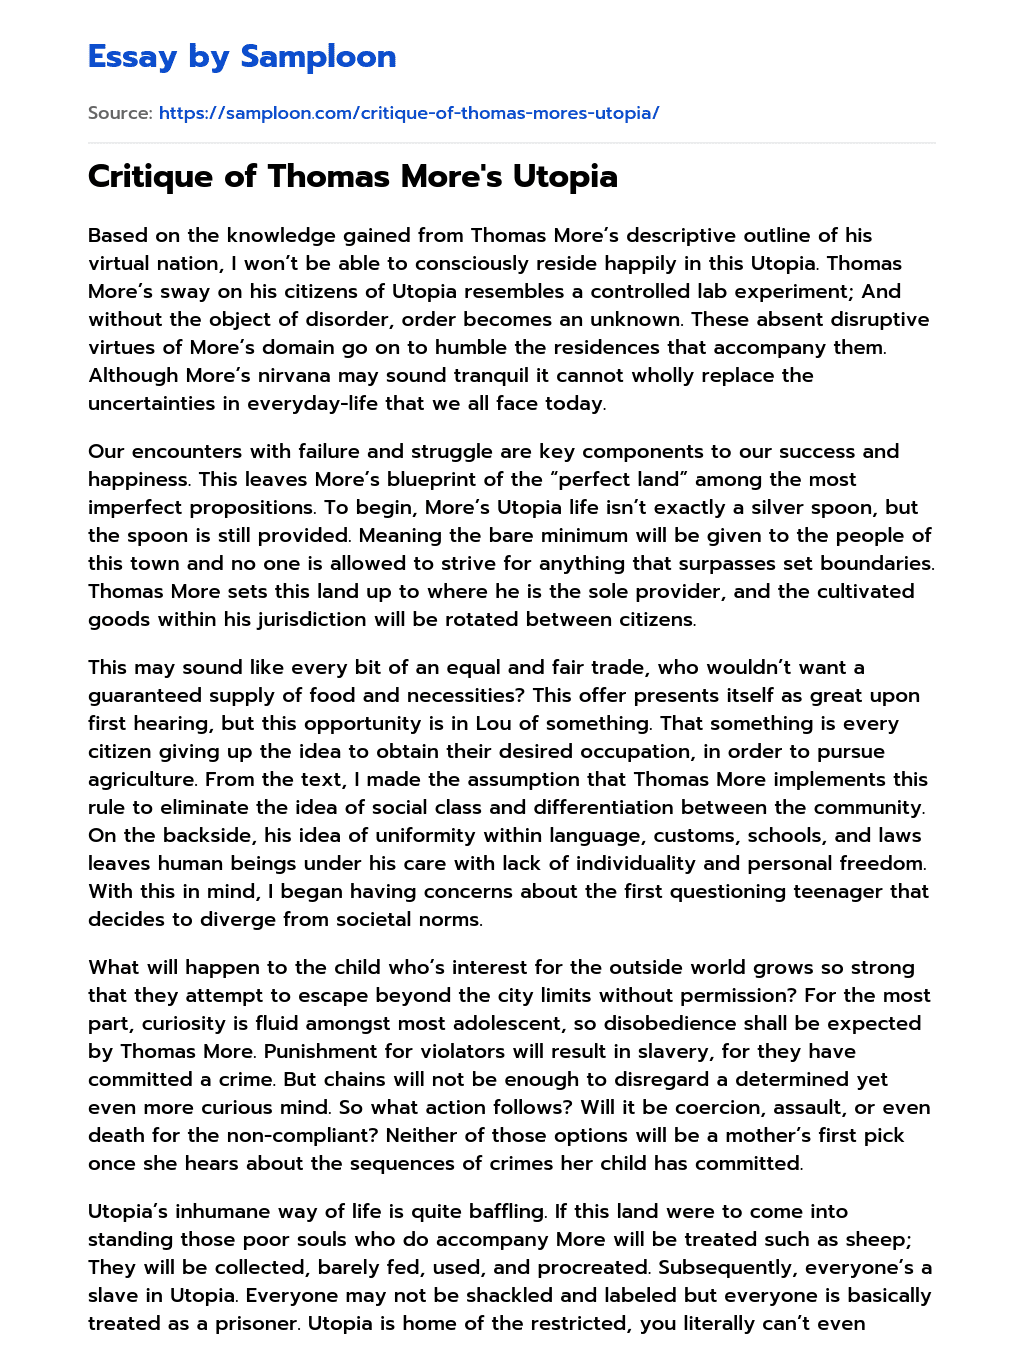 Critique of Thomas More’s Utopia essay